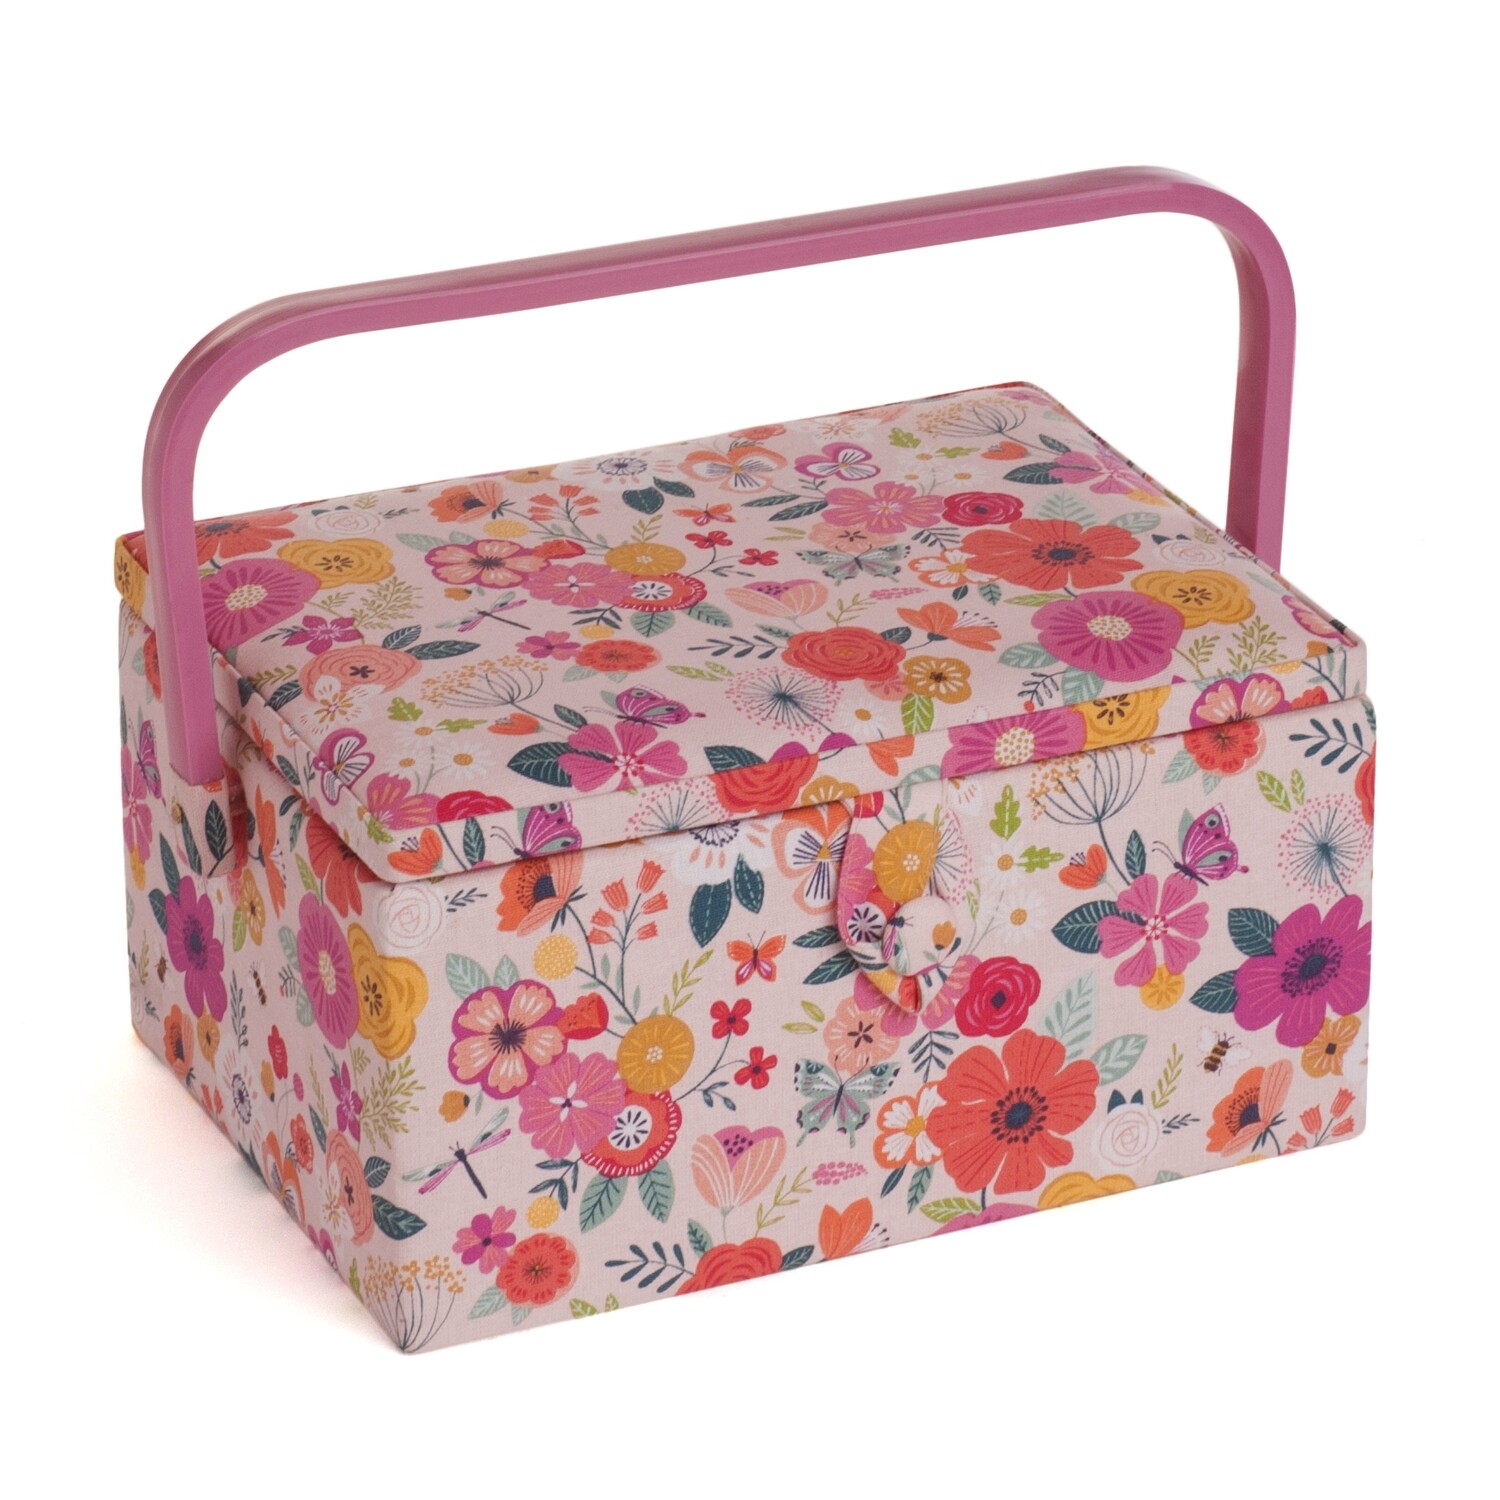 Sewing Box Medium - Floral Garden Pink